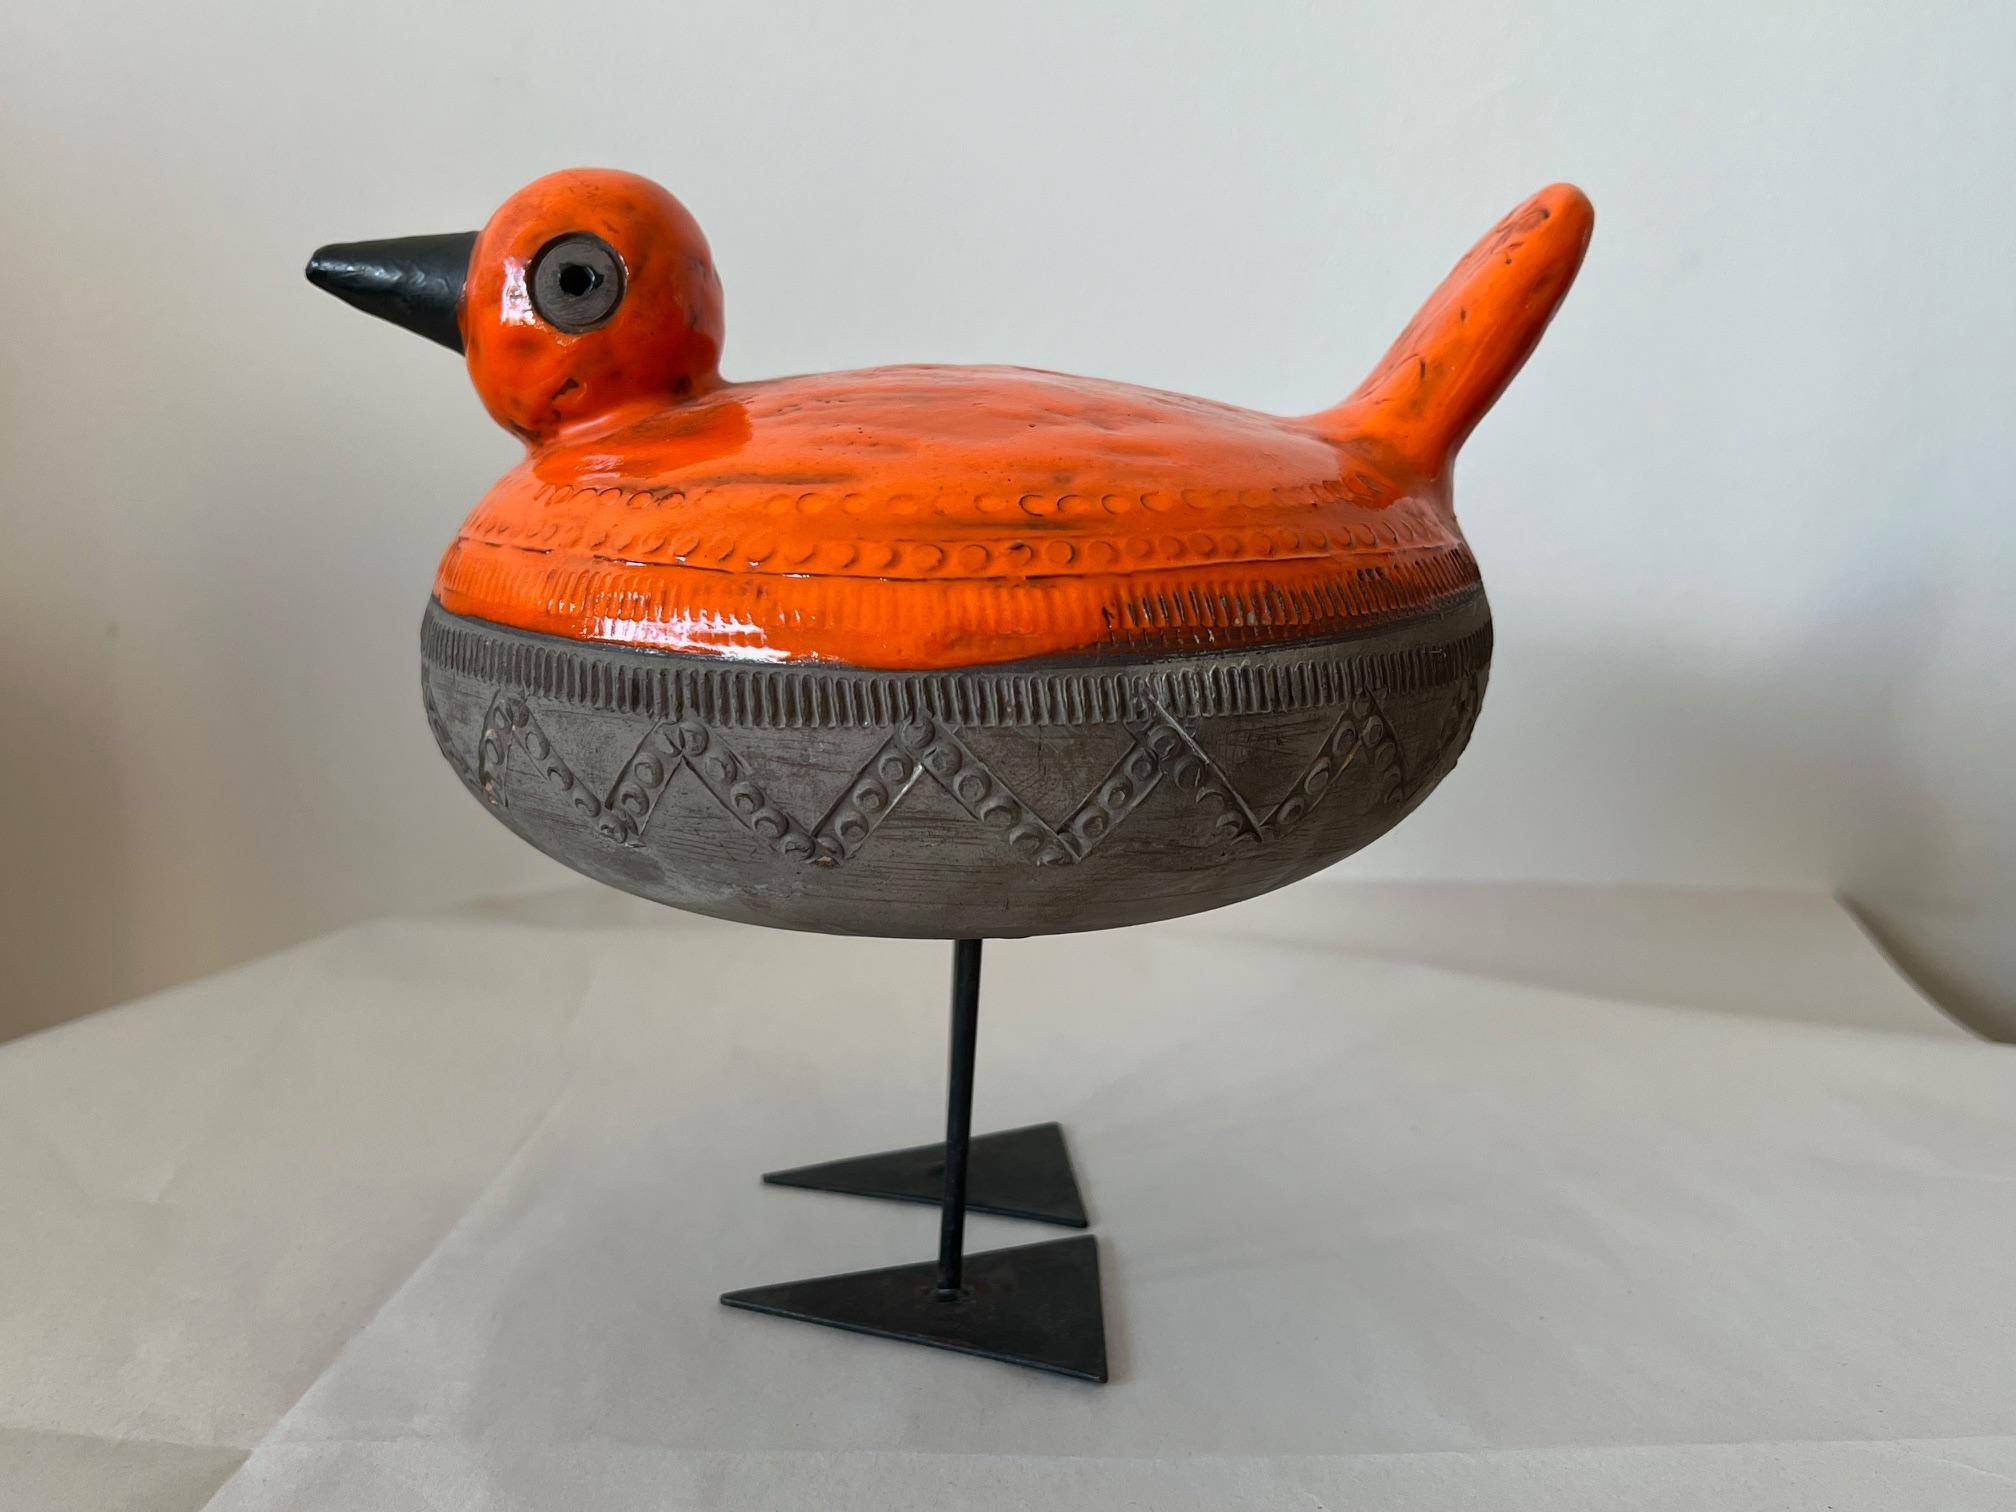 Rare bird (duck) with metal feet by Aldo Londi for Bitossi, ca' 1960's. Handmade. Shiny orange glaze, contrasting with matte gray/brown. 